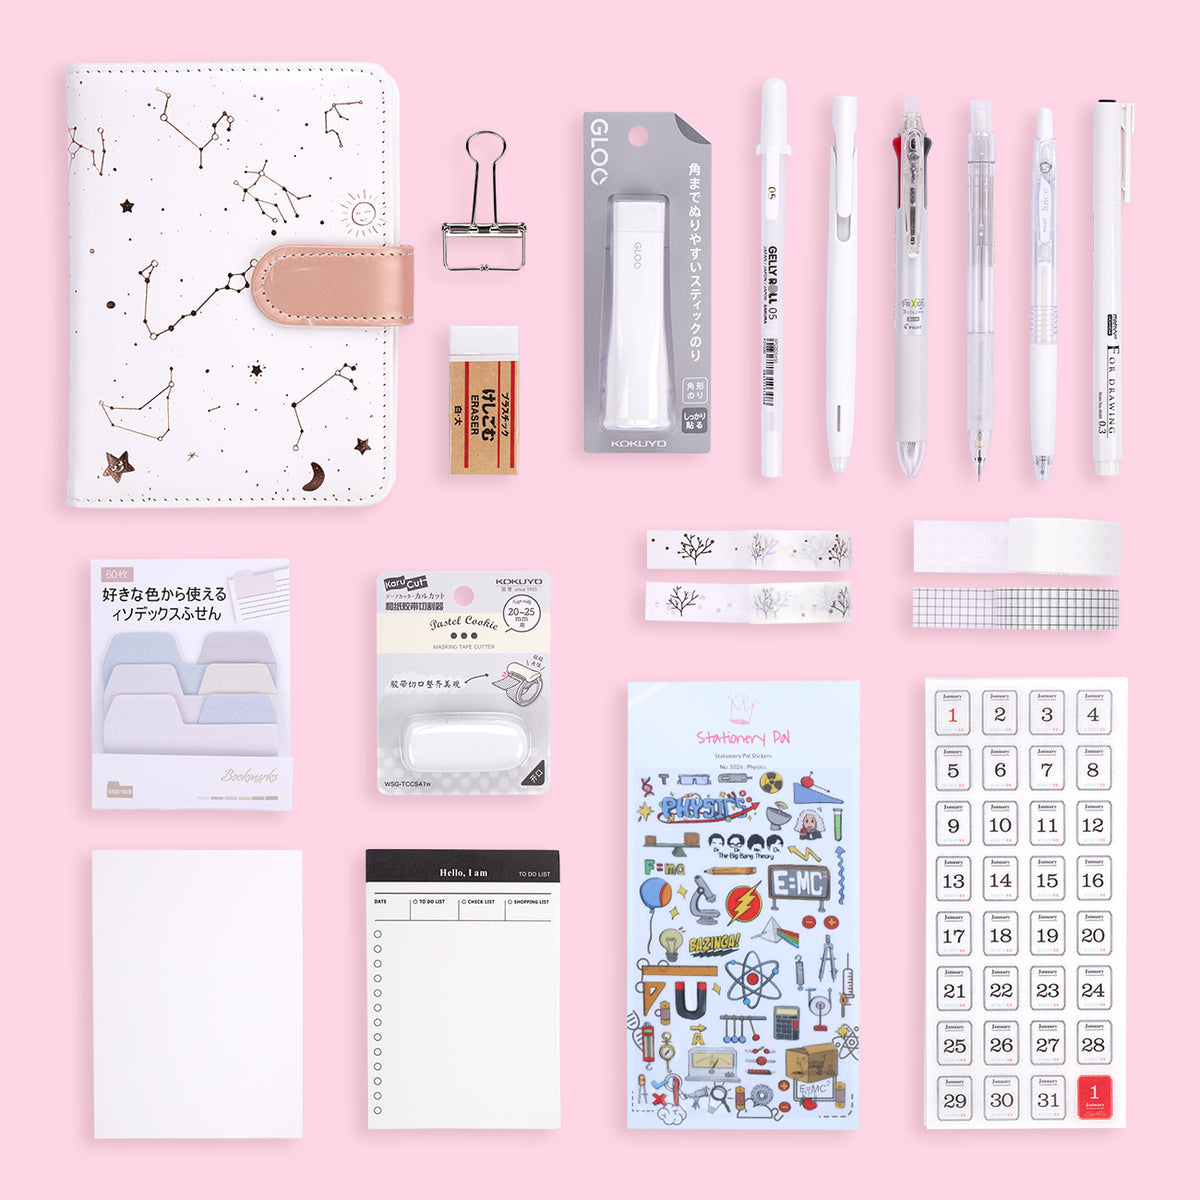 2020 Bullet Journal Set Up + Louis Vuitton Desk Agenda Review